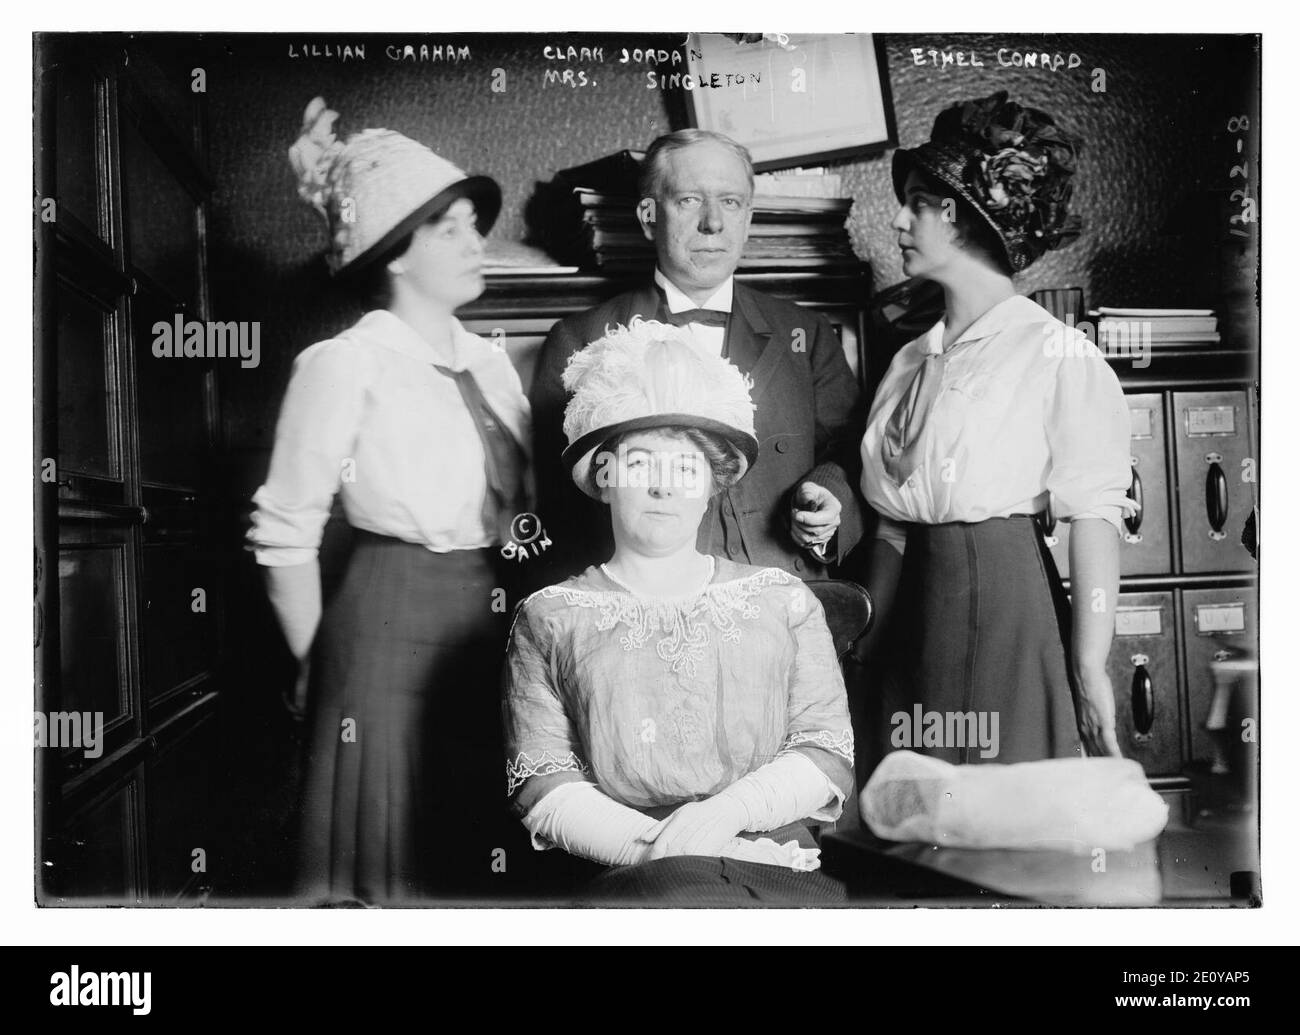 Lillian Graham (L), Clark Jordan (C), Ethel Conrad (R), and Mrs. Singleton (front seated) Stock Photo